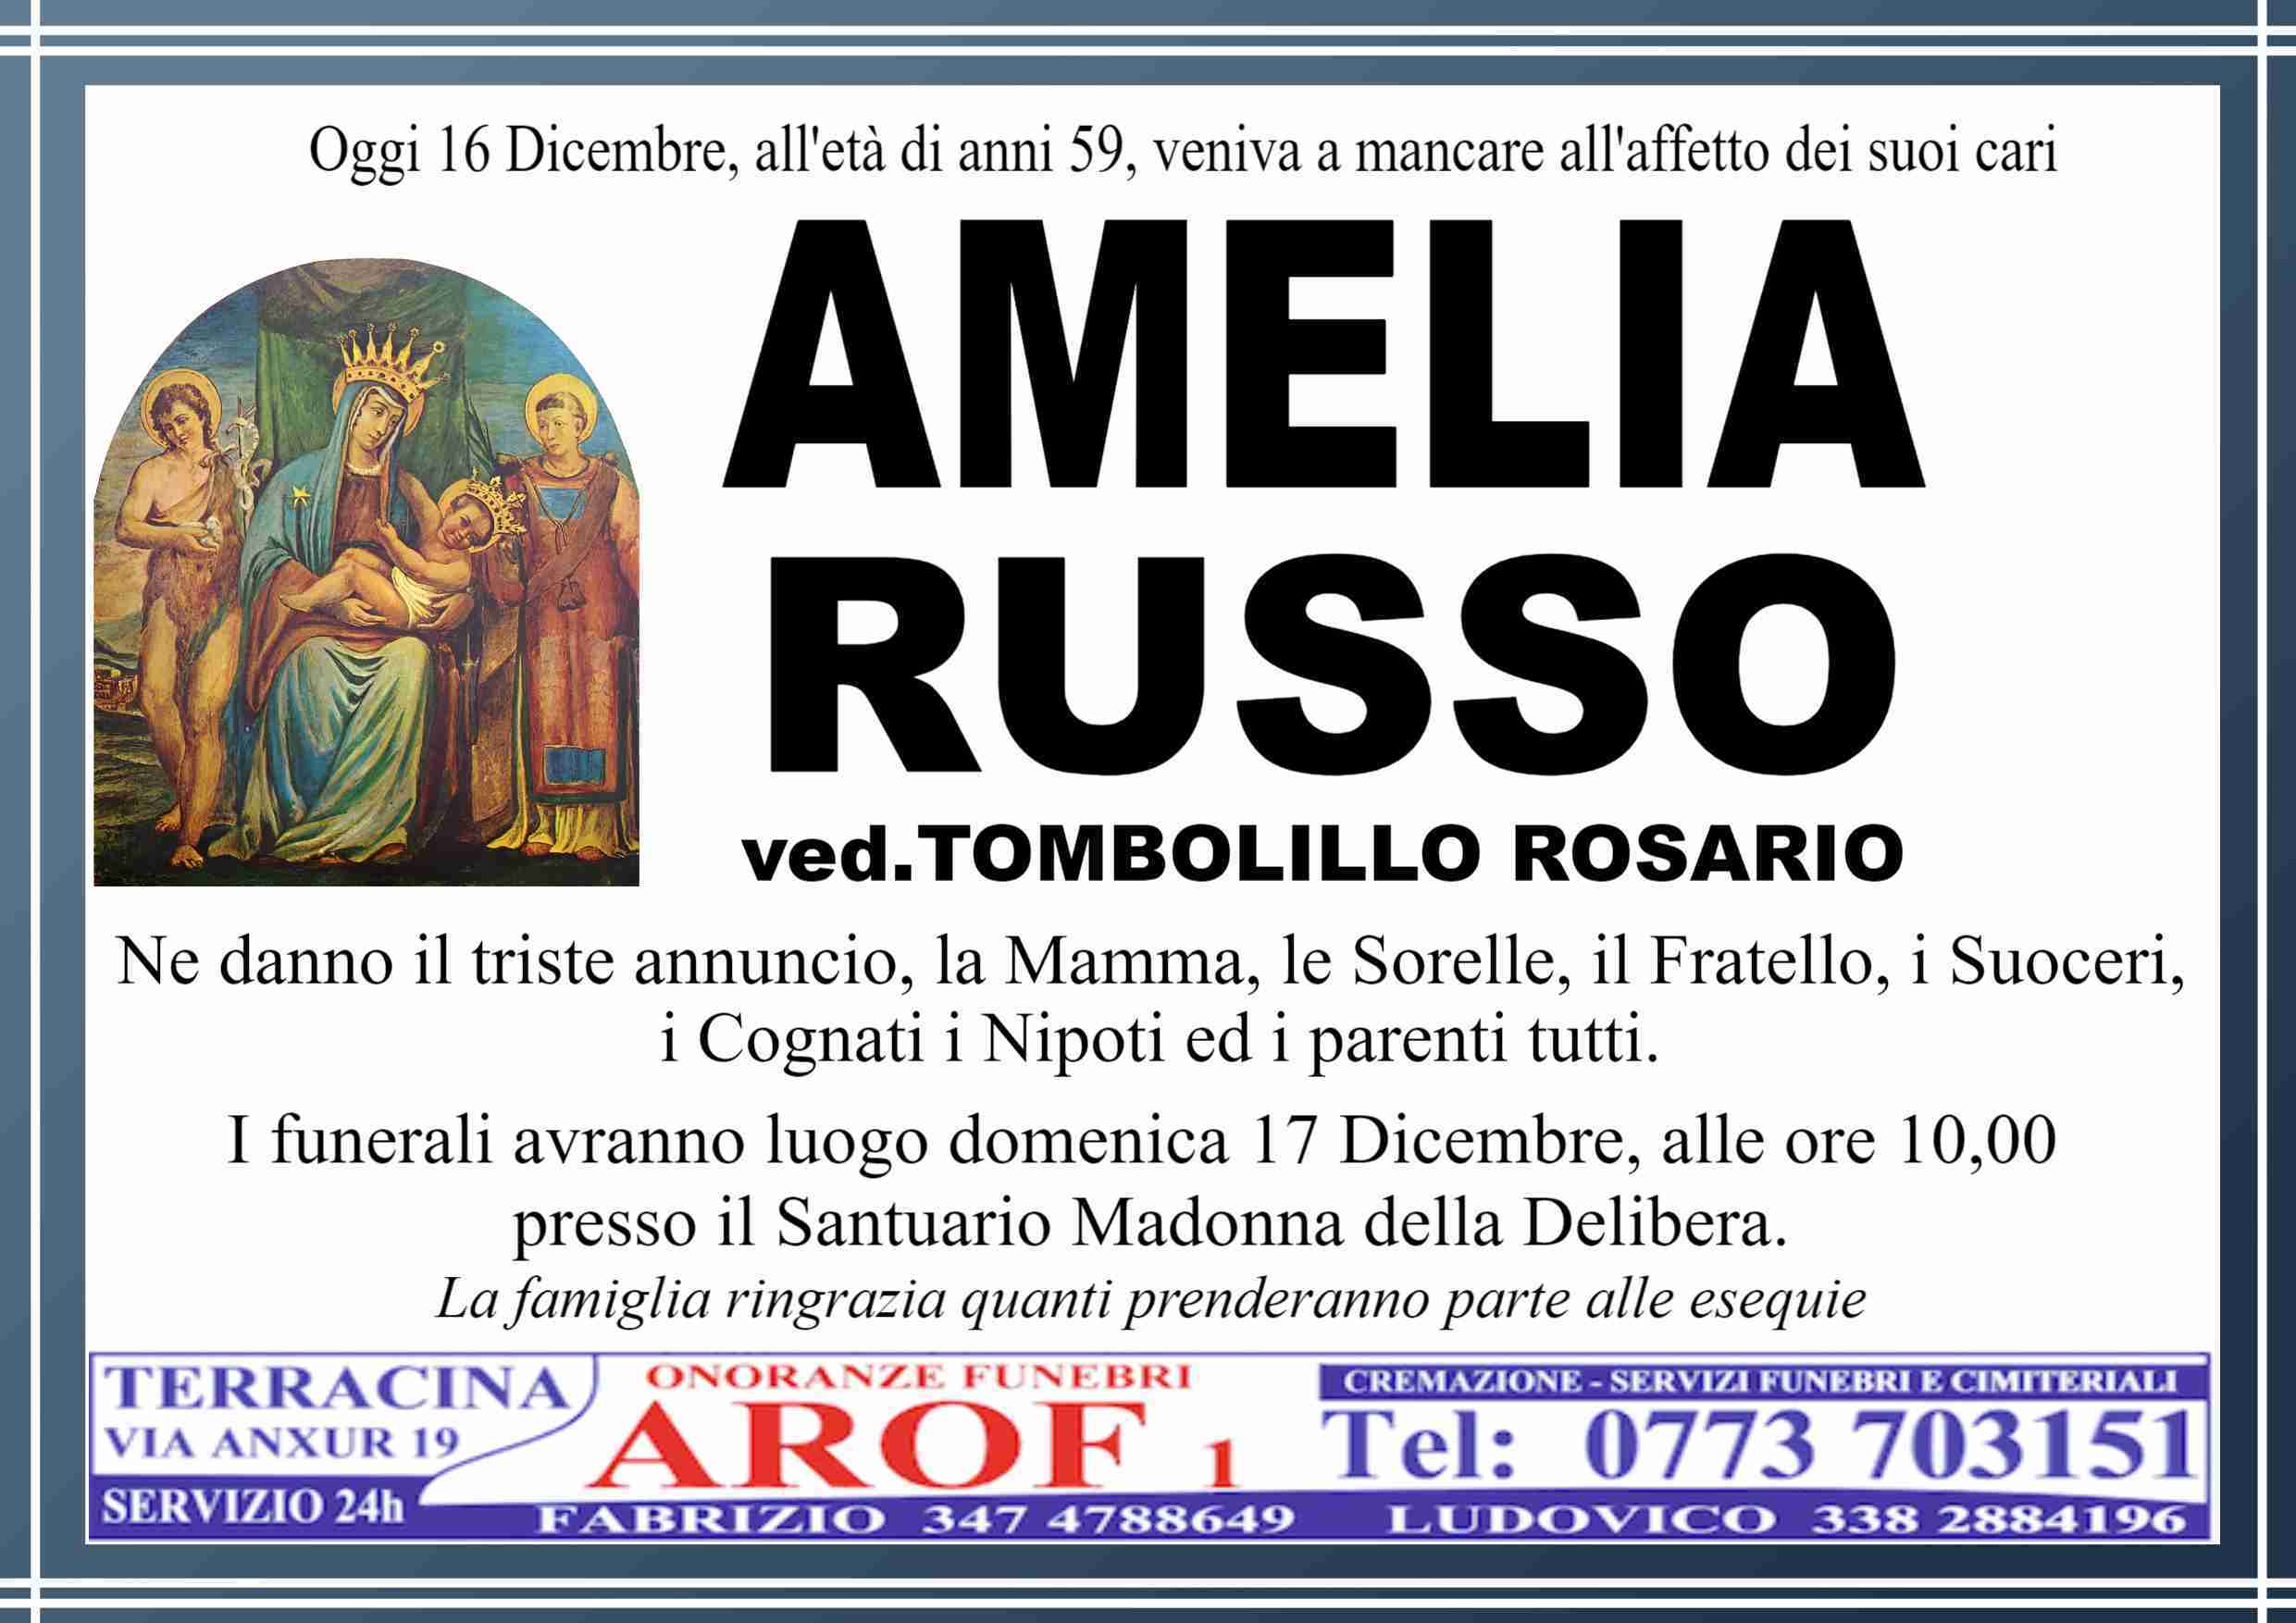 Amelia Russo